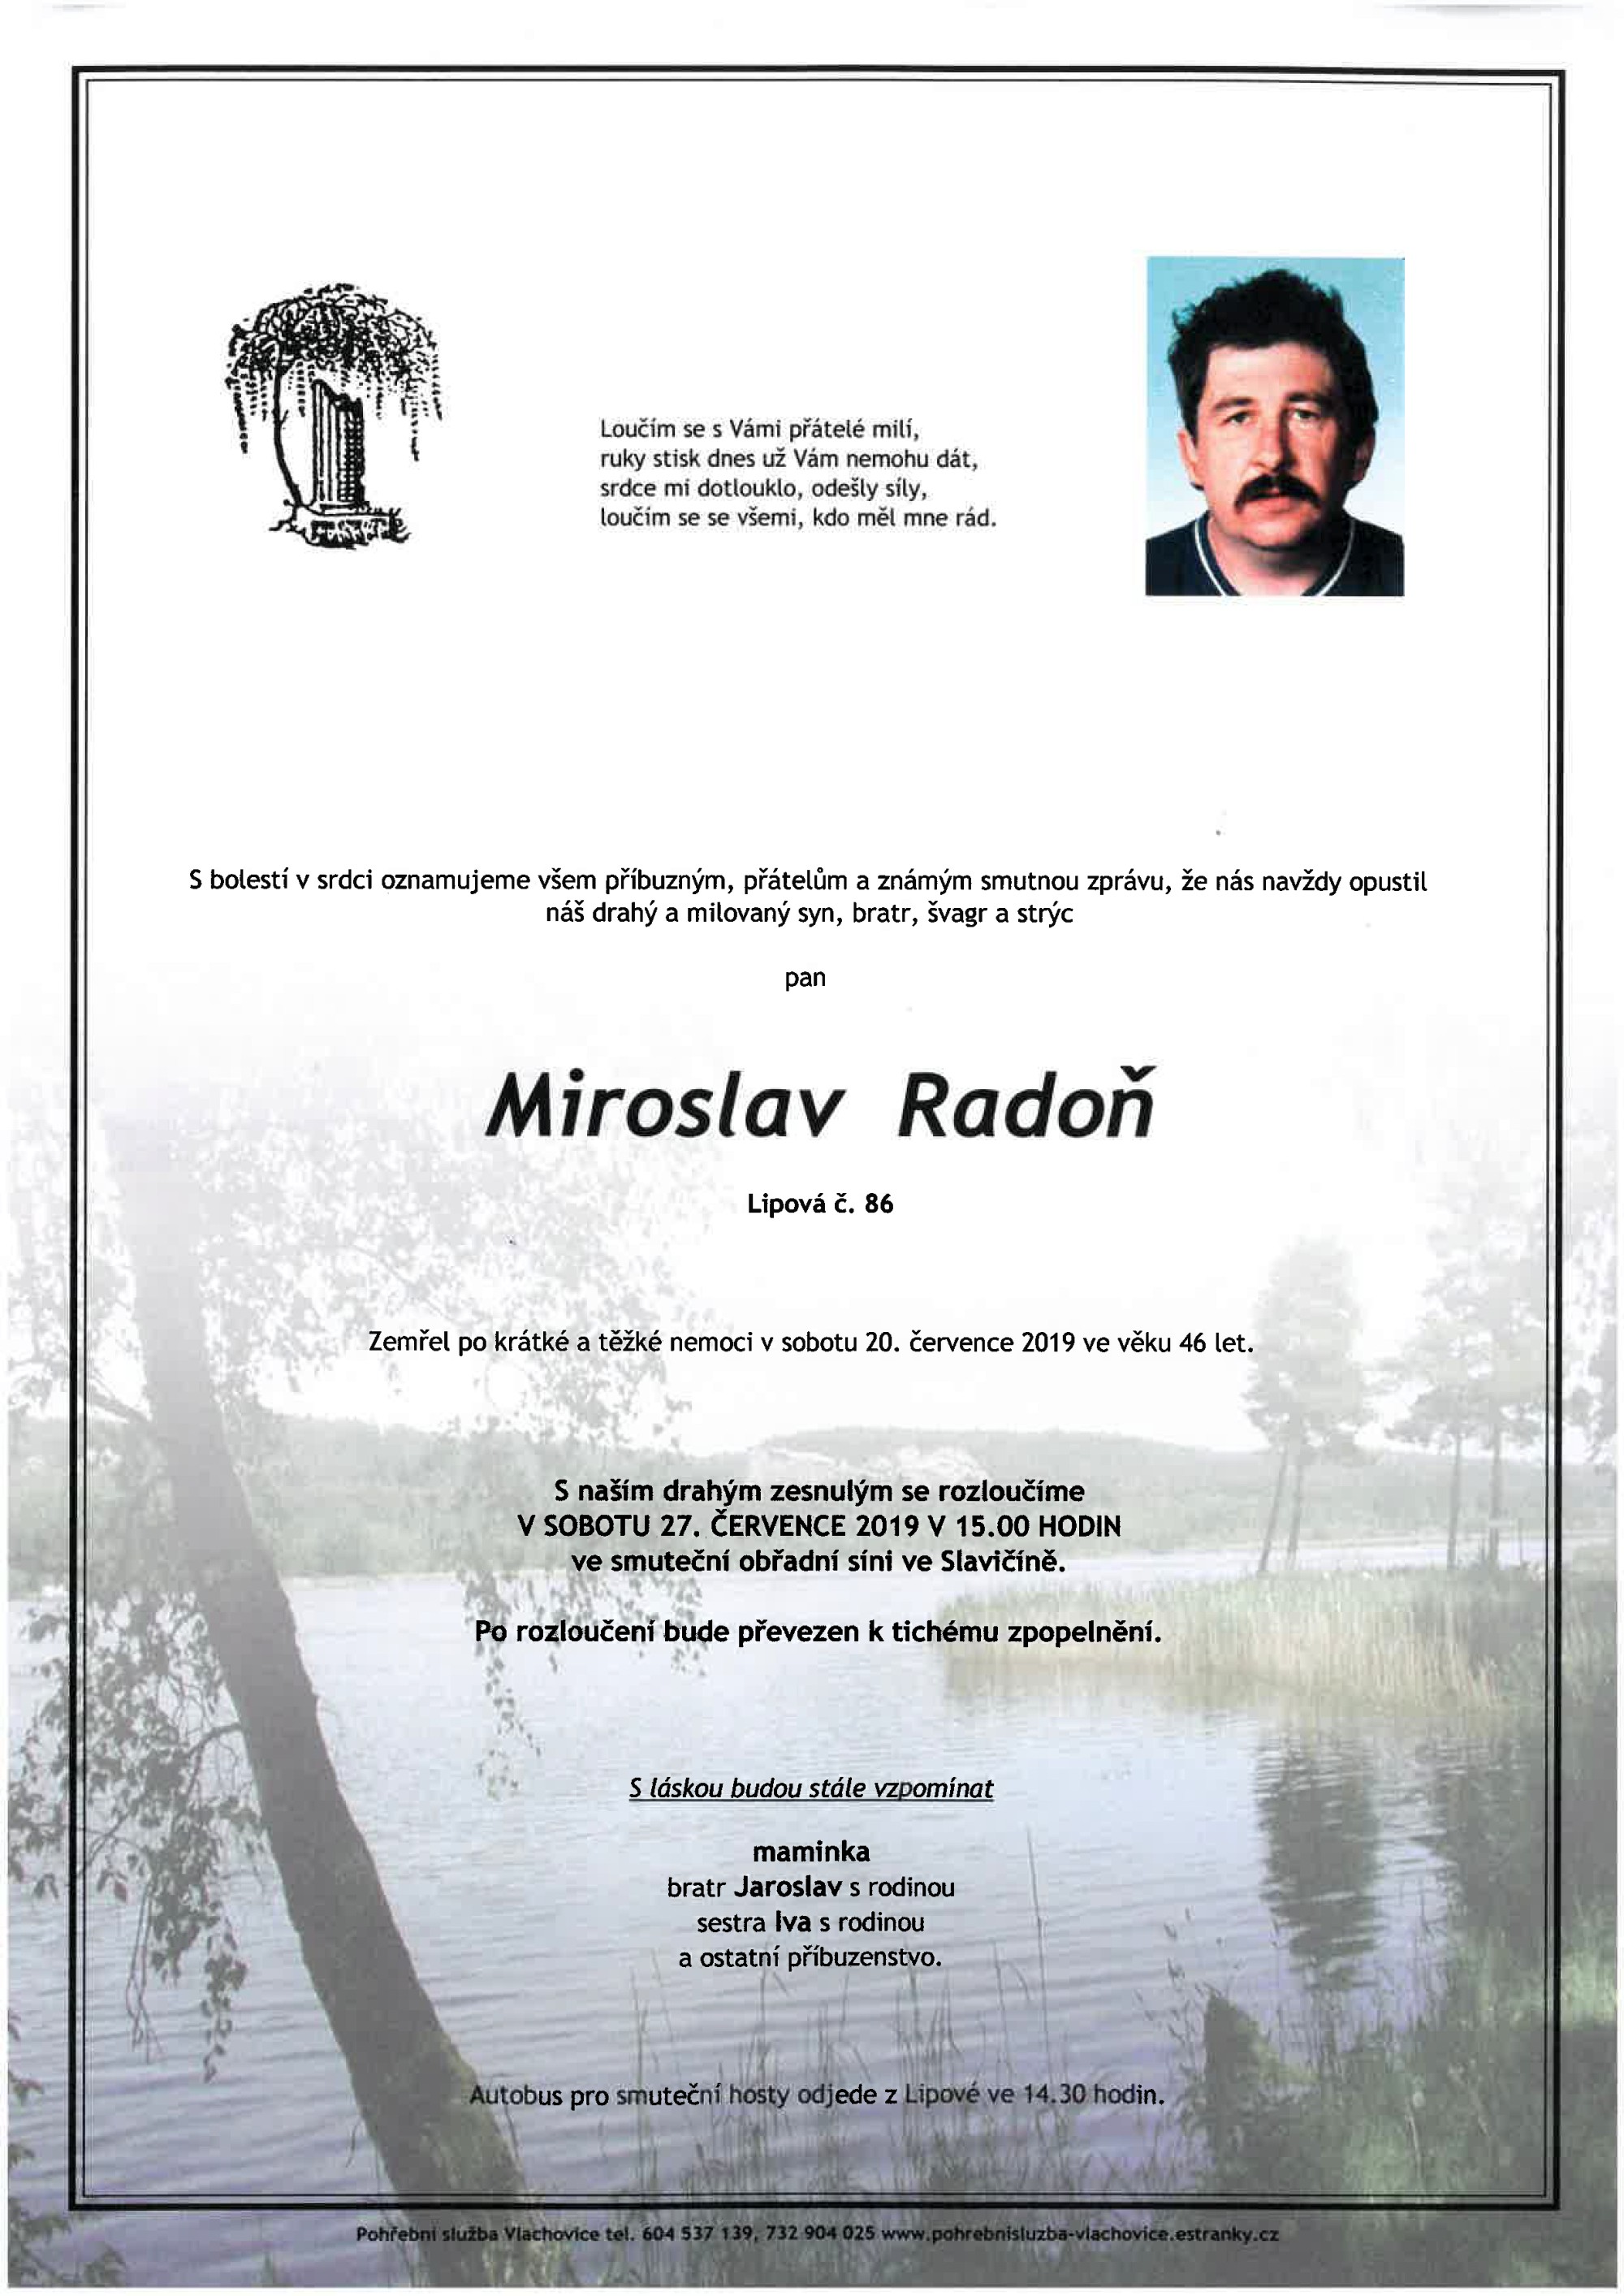 Miroslav Radoň